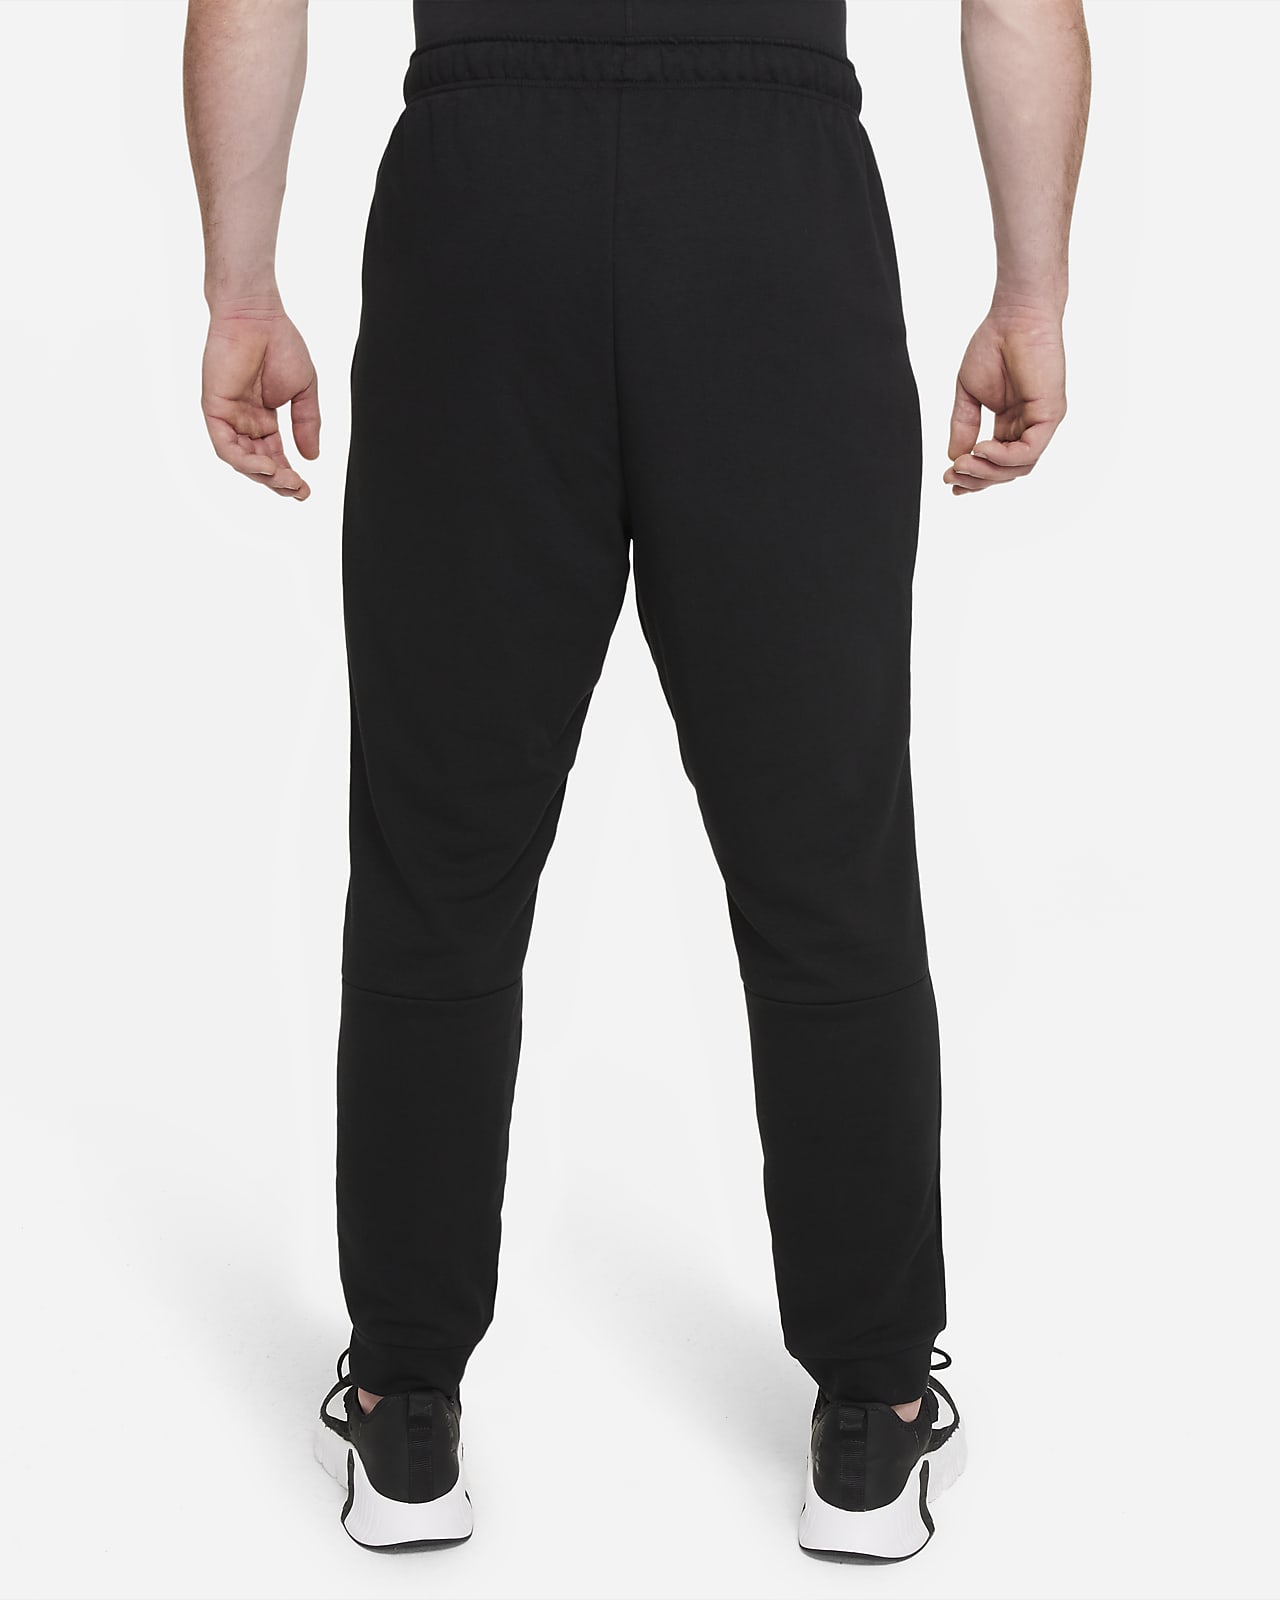 Nike Training Dry tapered fleece sweatpants in black